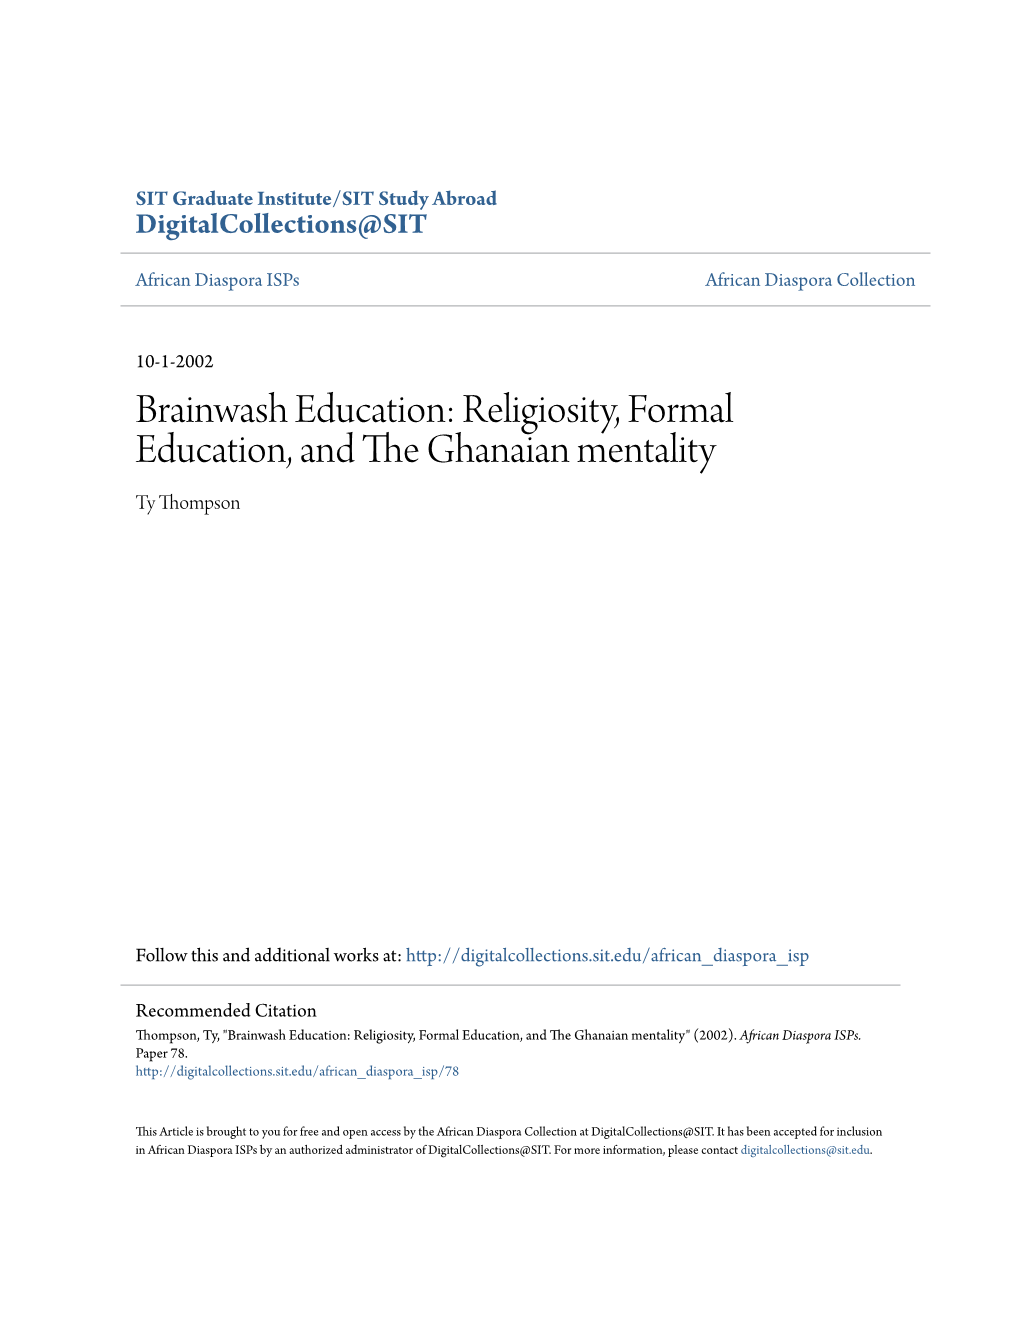 Brainwash Education: Religiosity, Formal Education, and the Ghanaian Mentality Ty Thompson